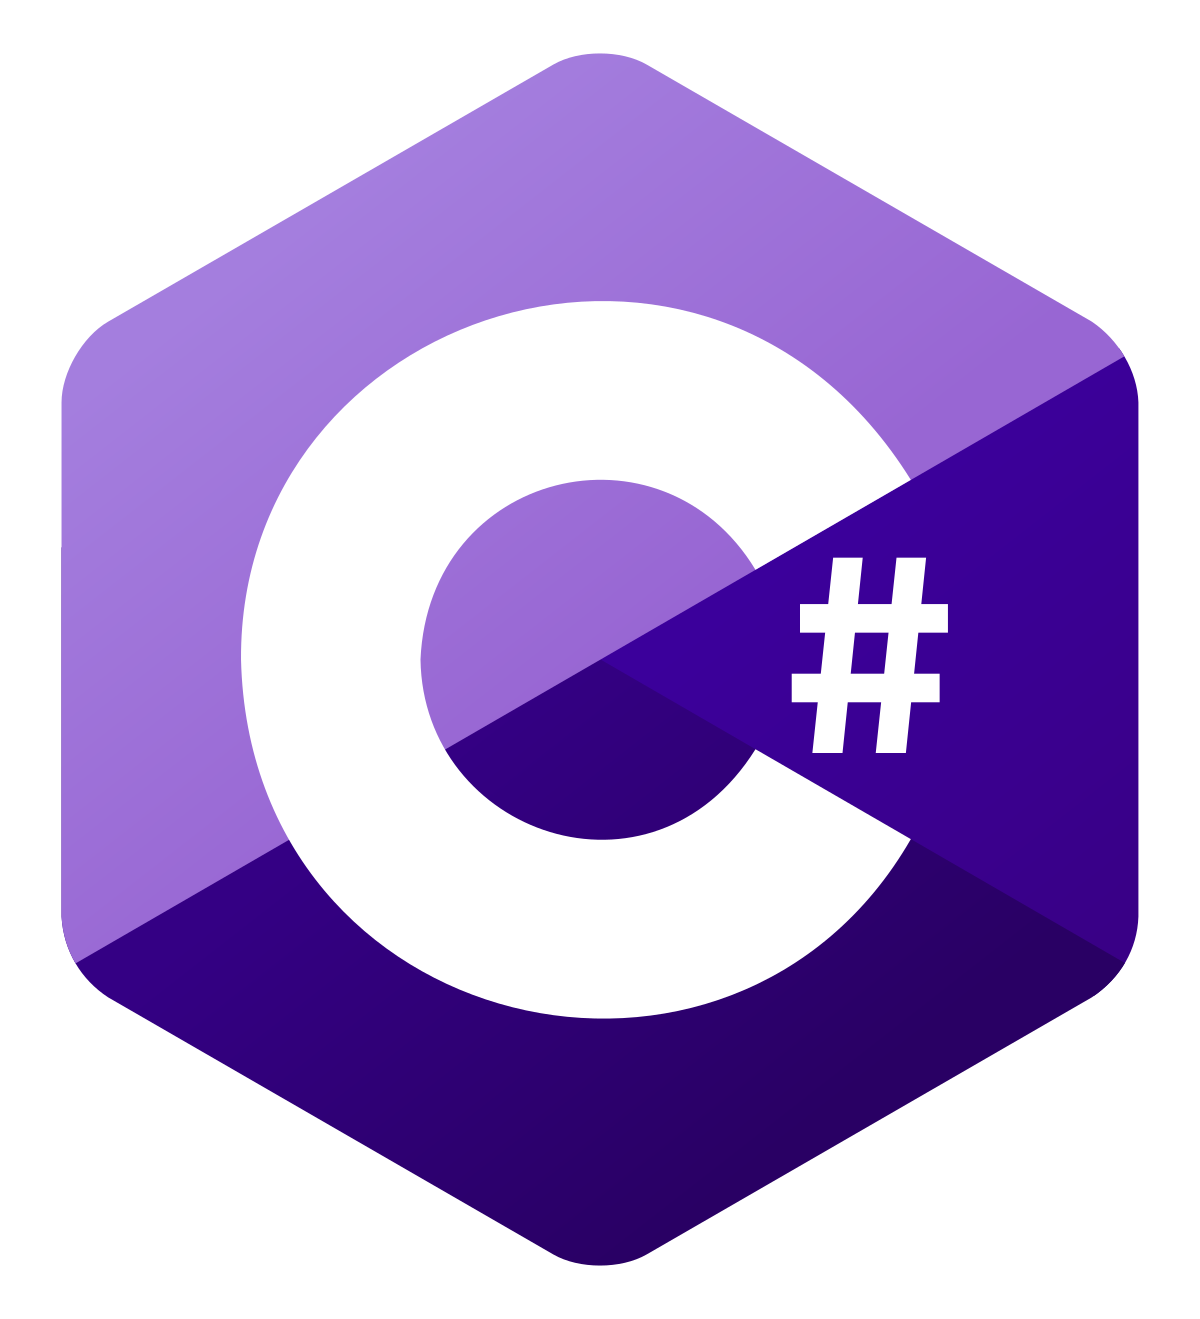 C# by Microsoft Corporation